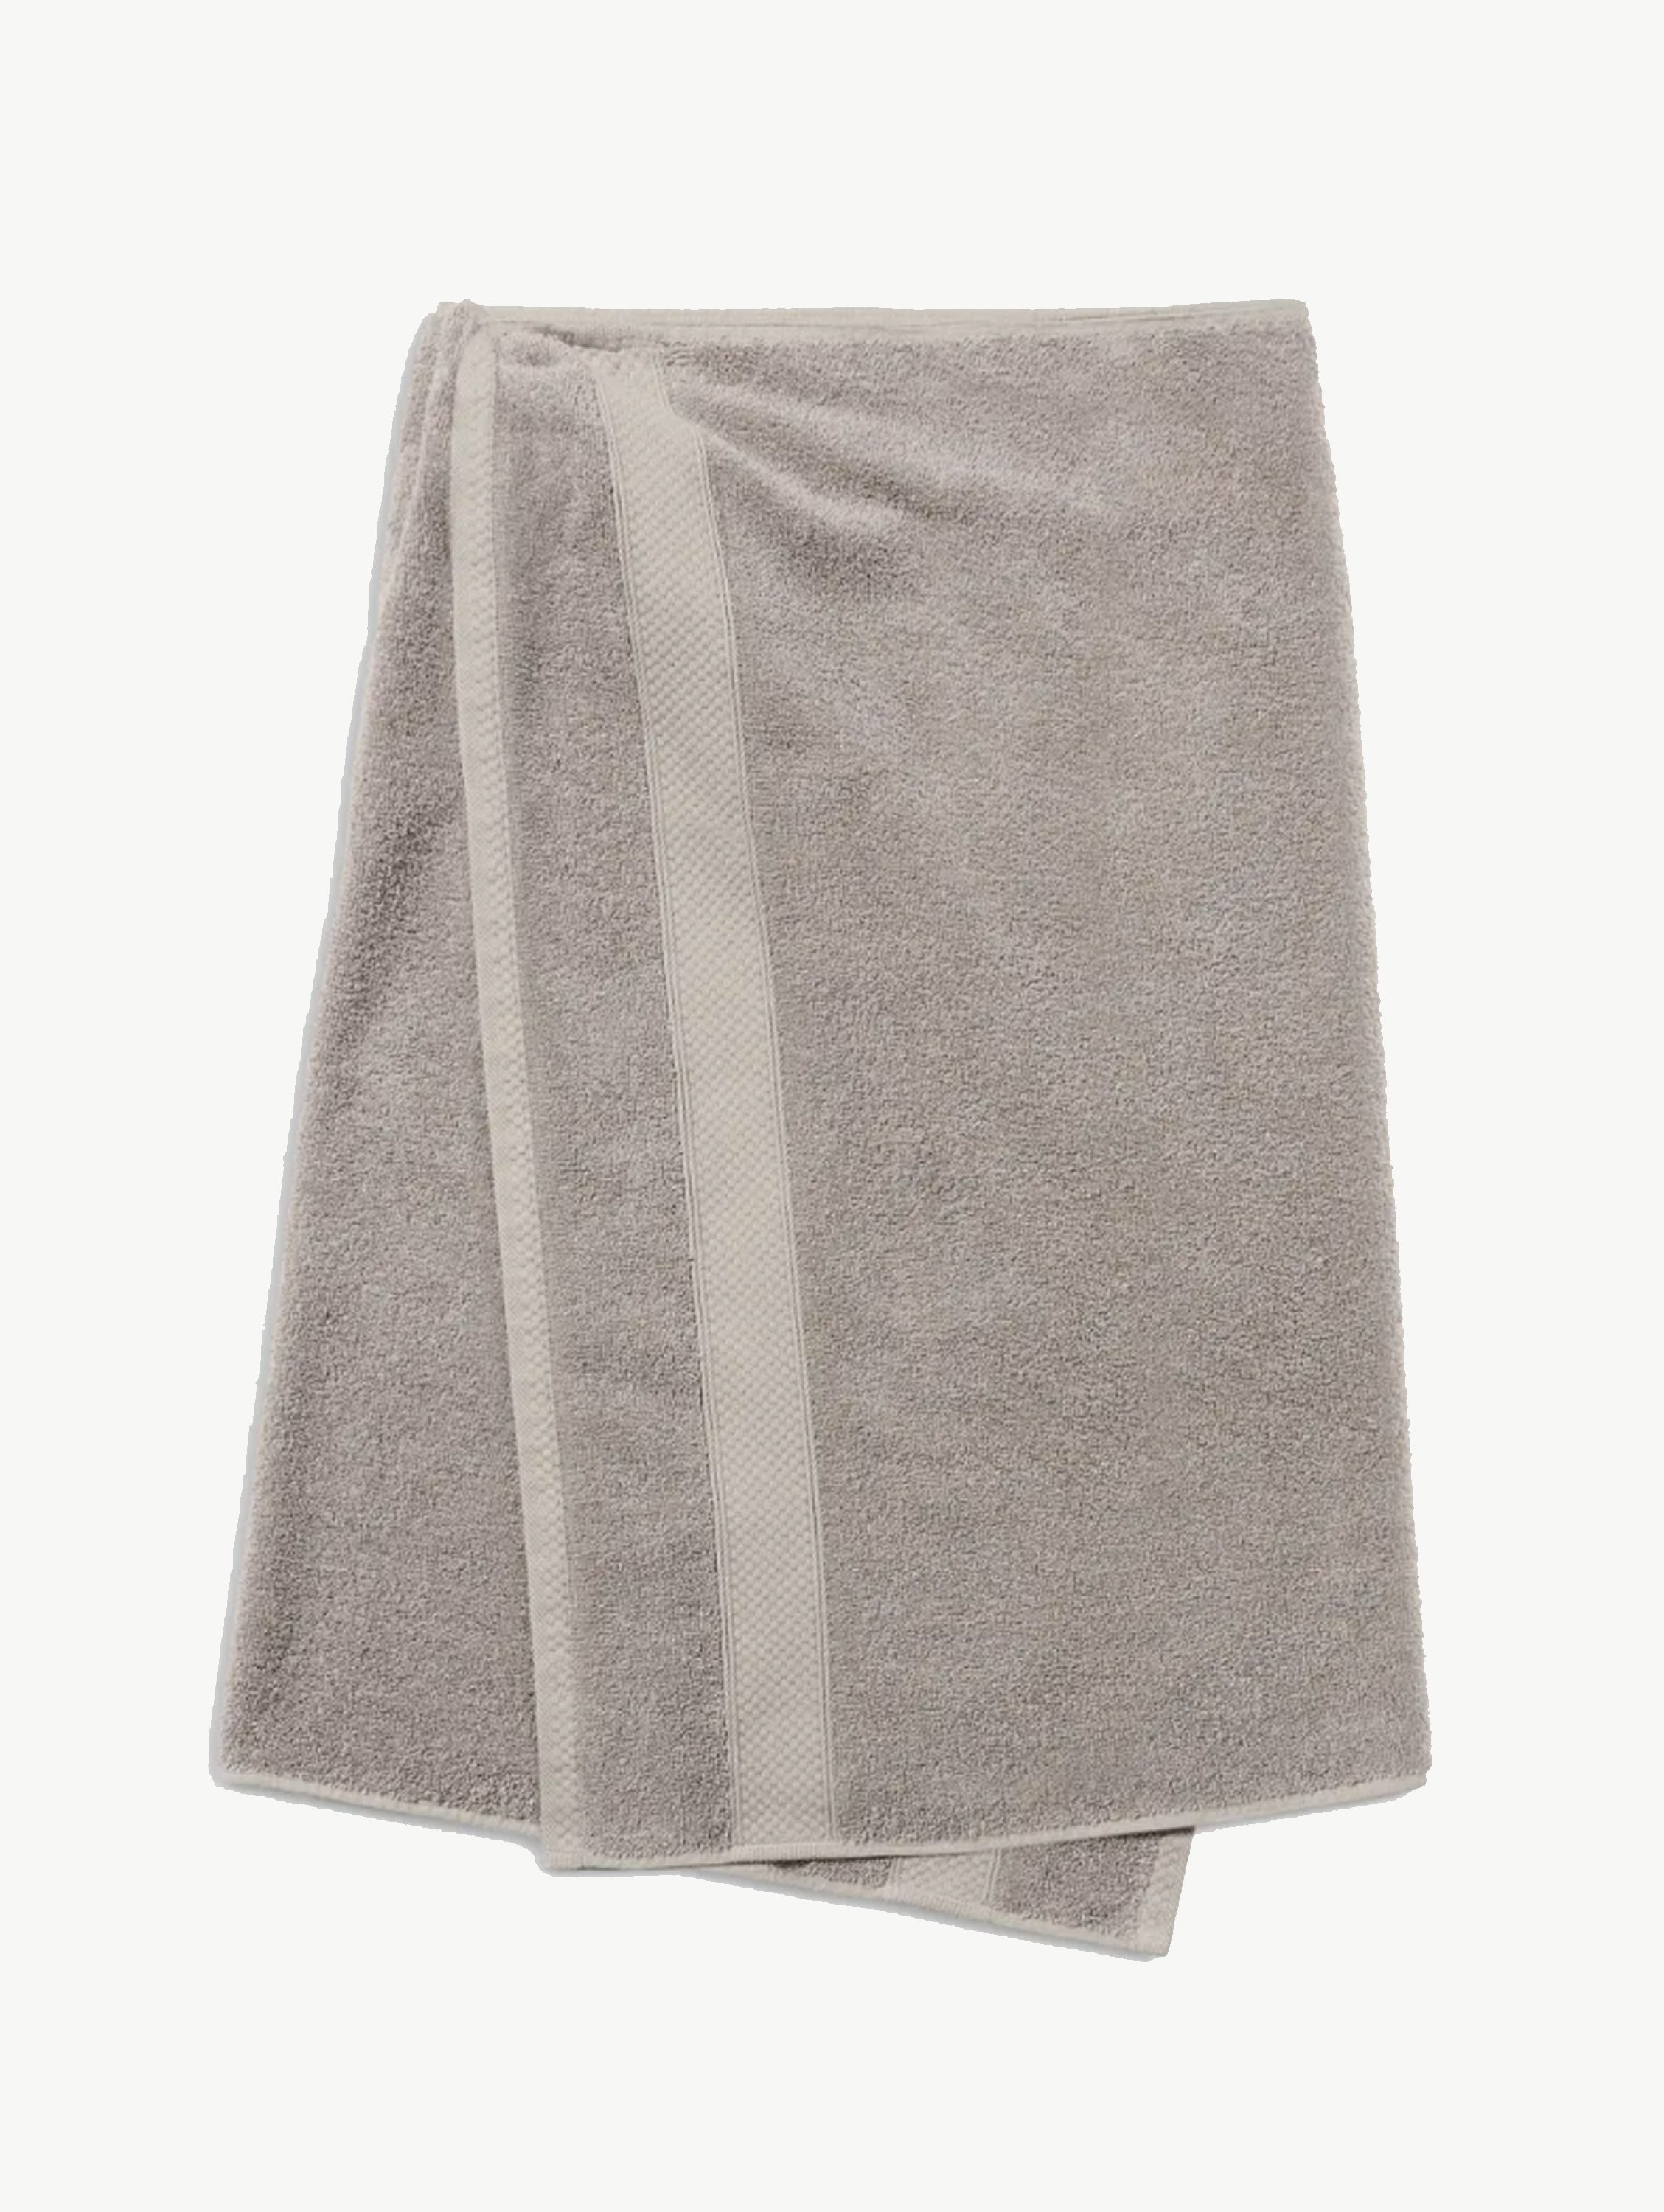 Towel skirt